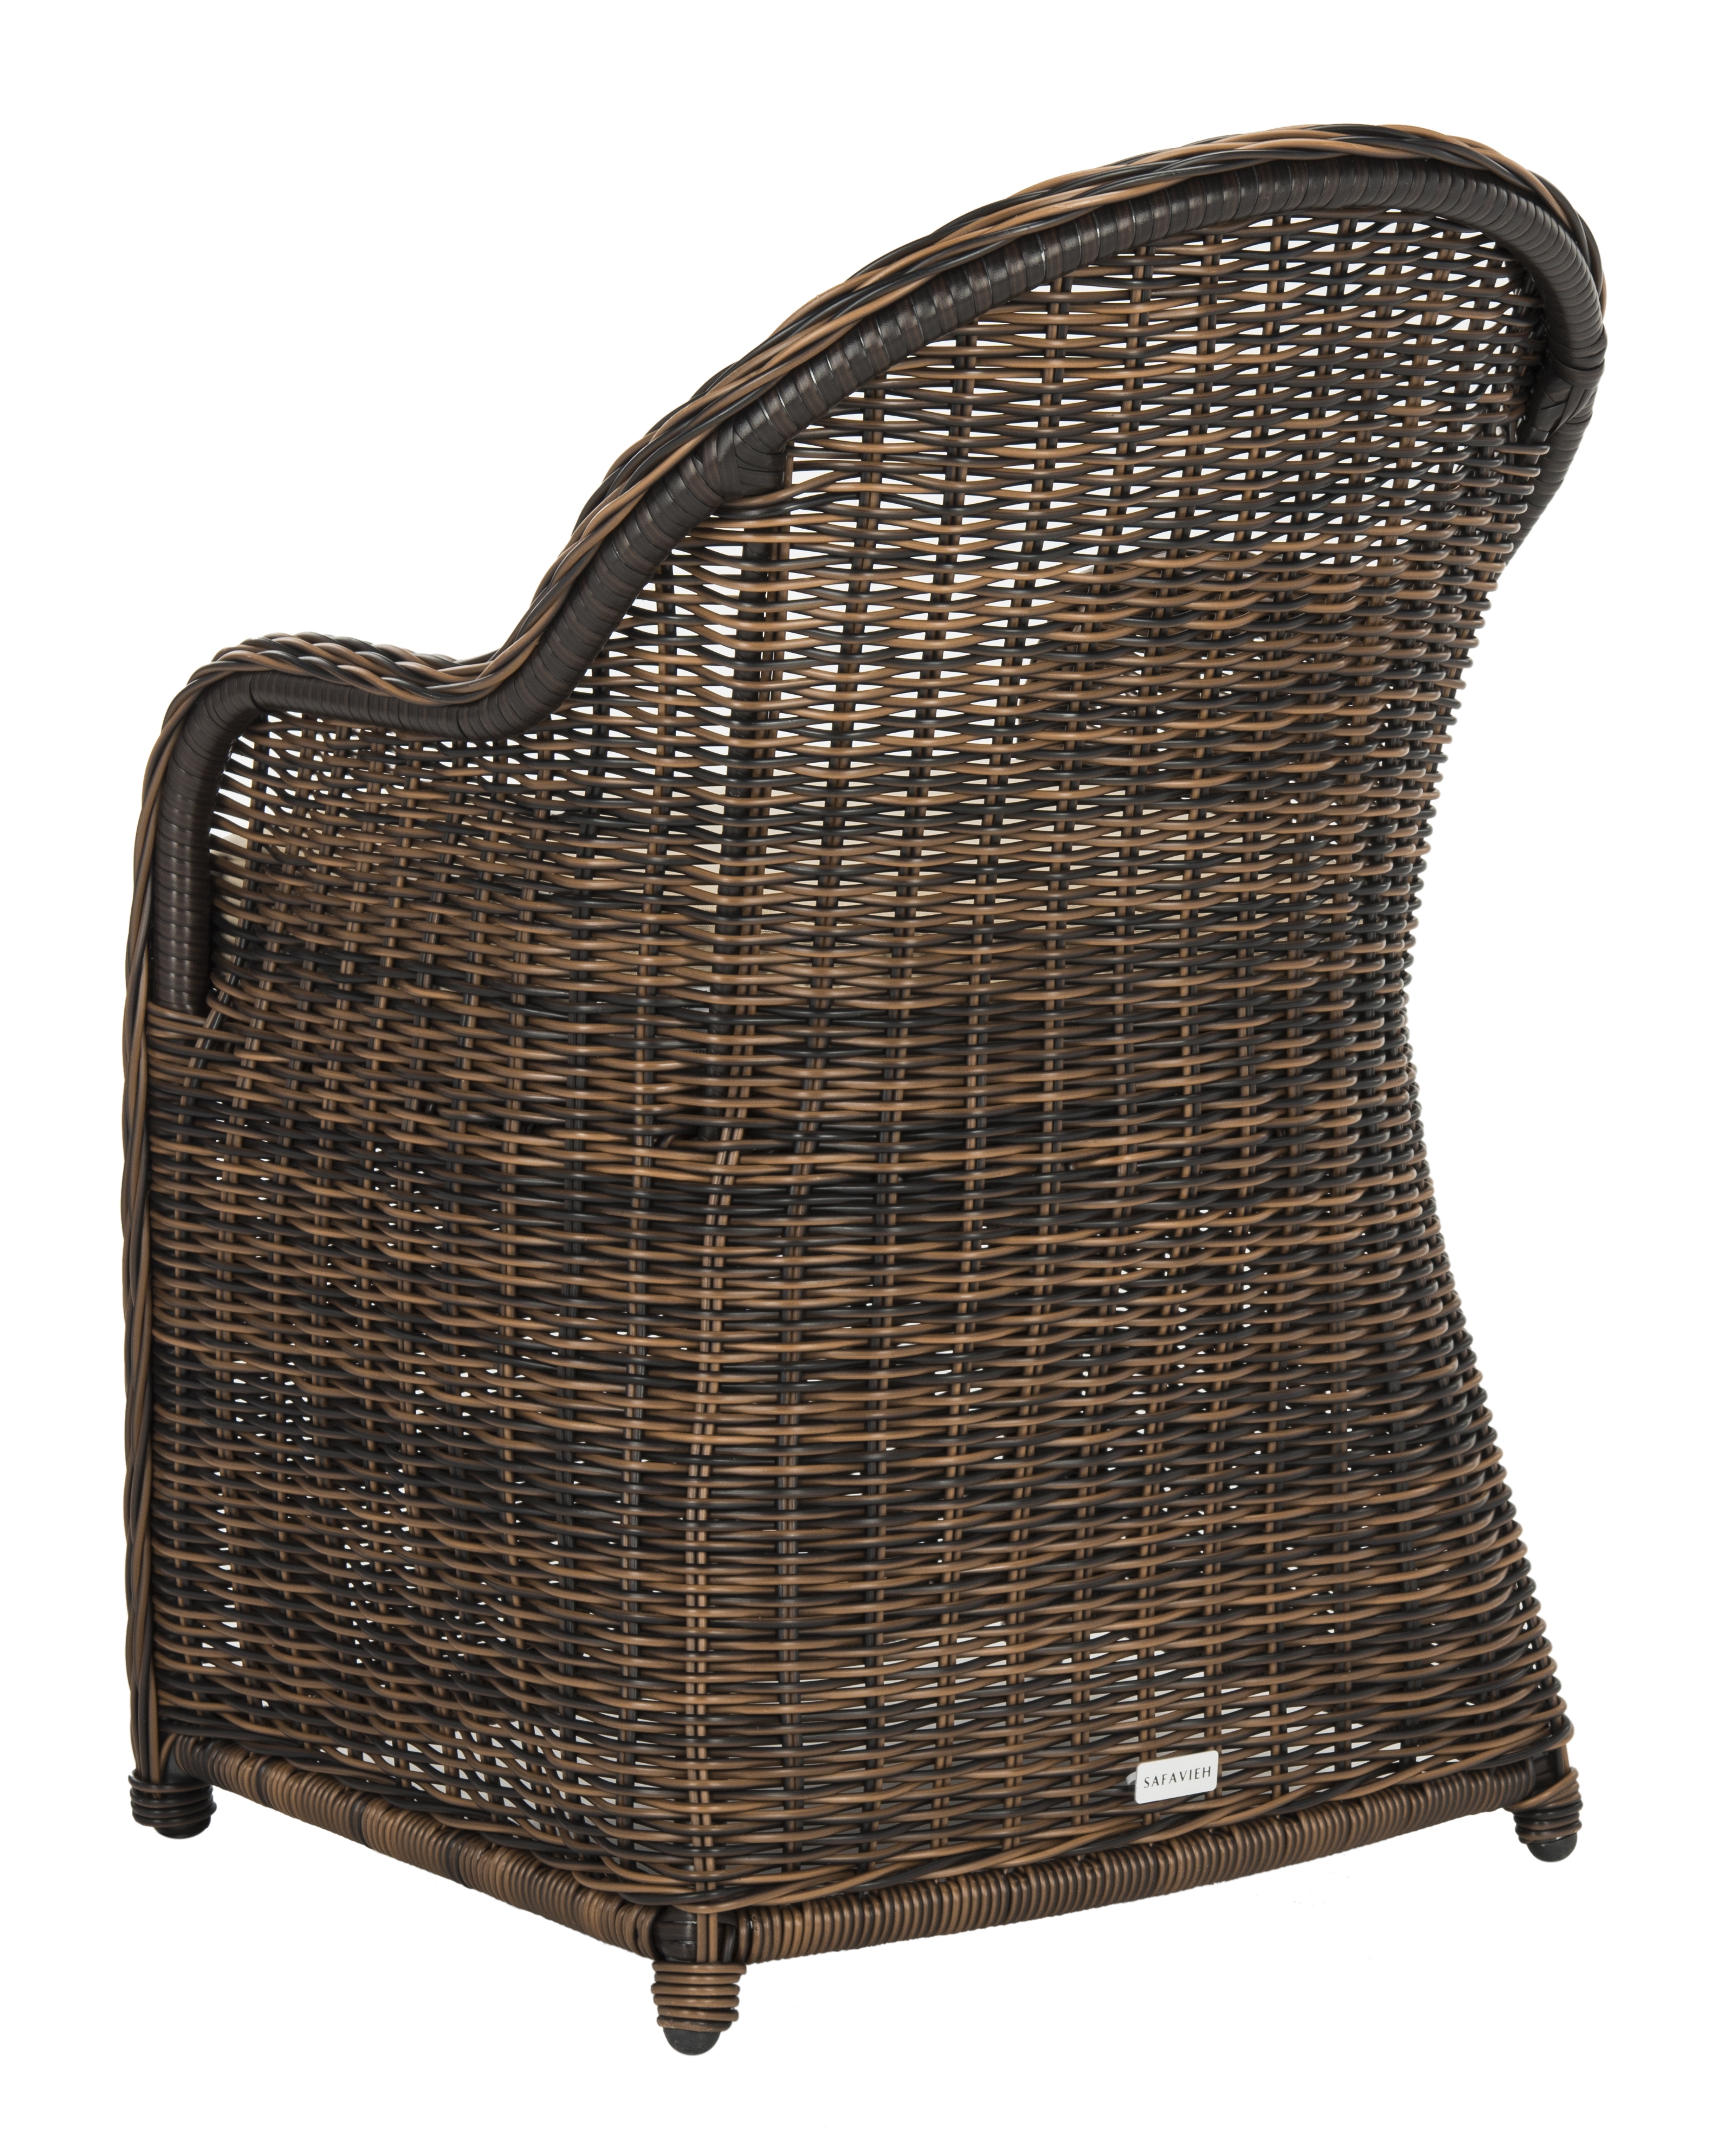 Newton Wicker Arm Chair With Cushion - Brown/Beige - Safavieh - Image 3